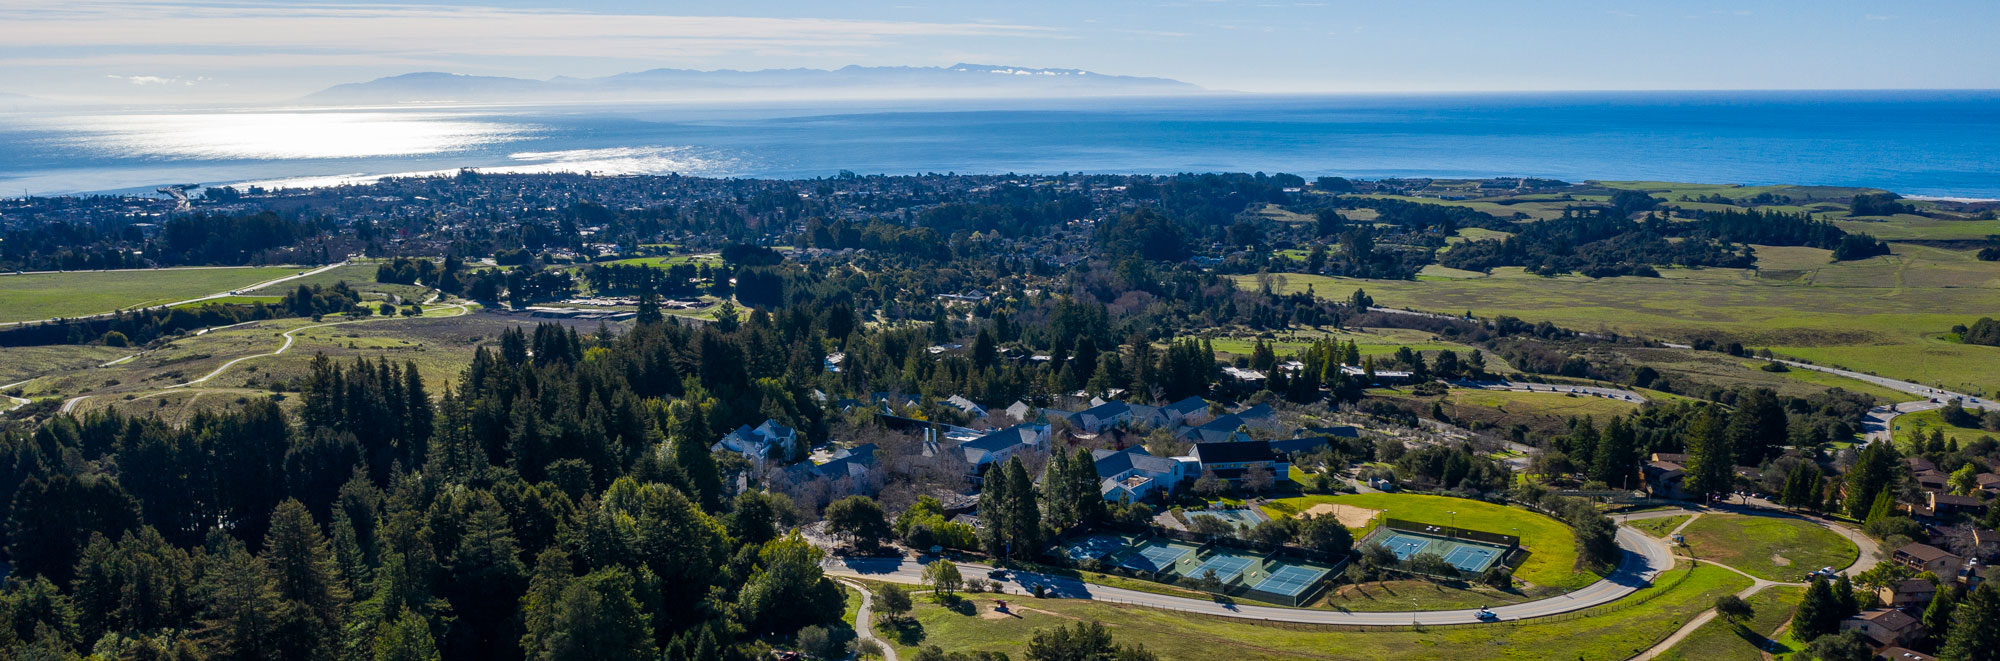 UC Santa Cruz aerial campus